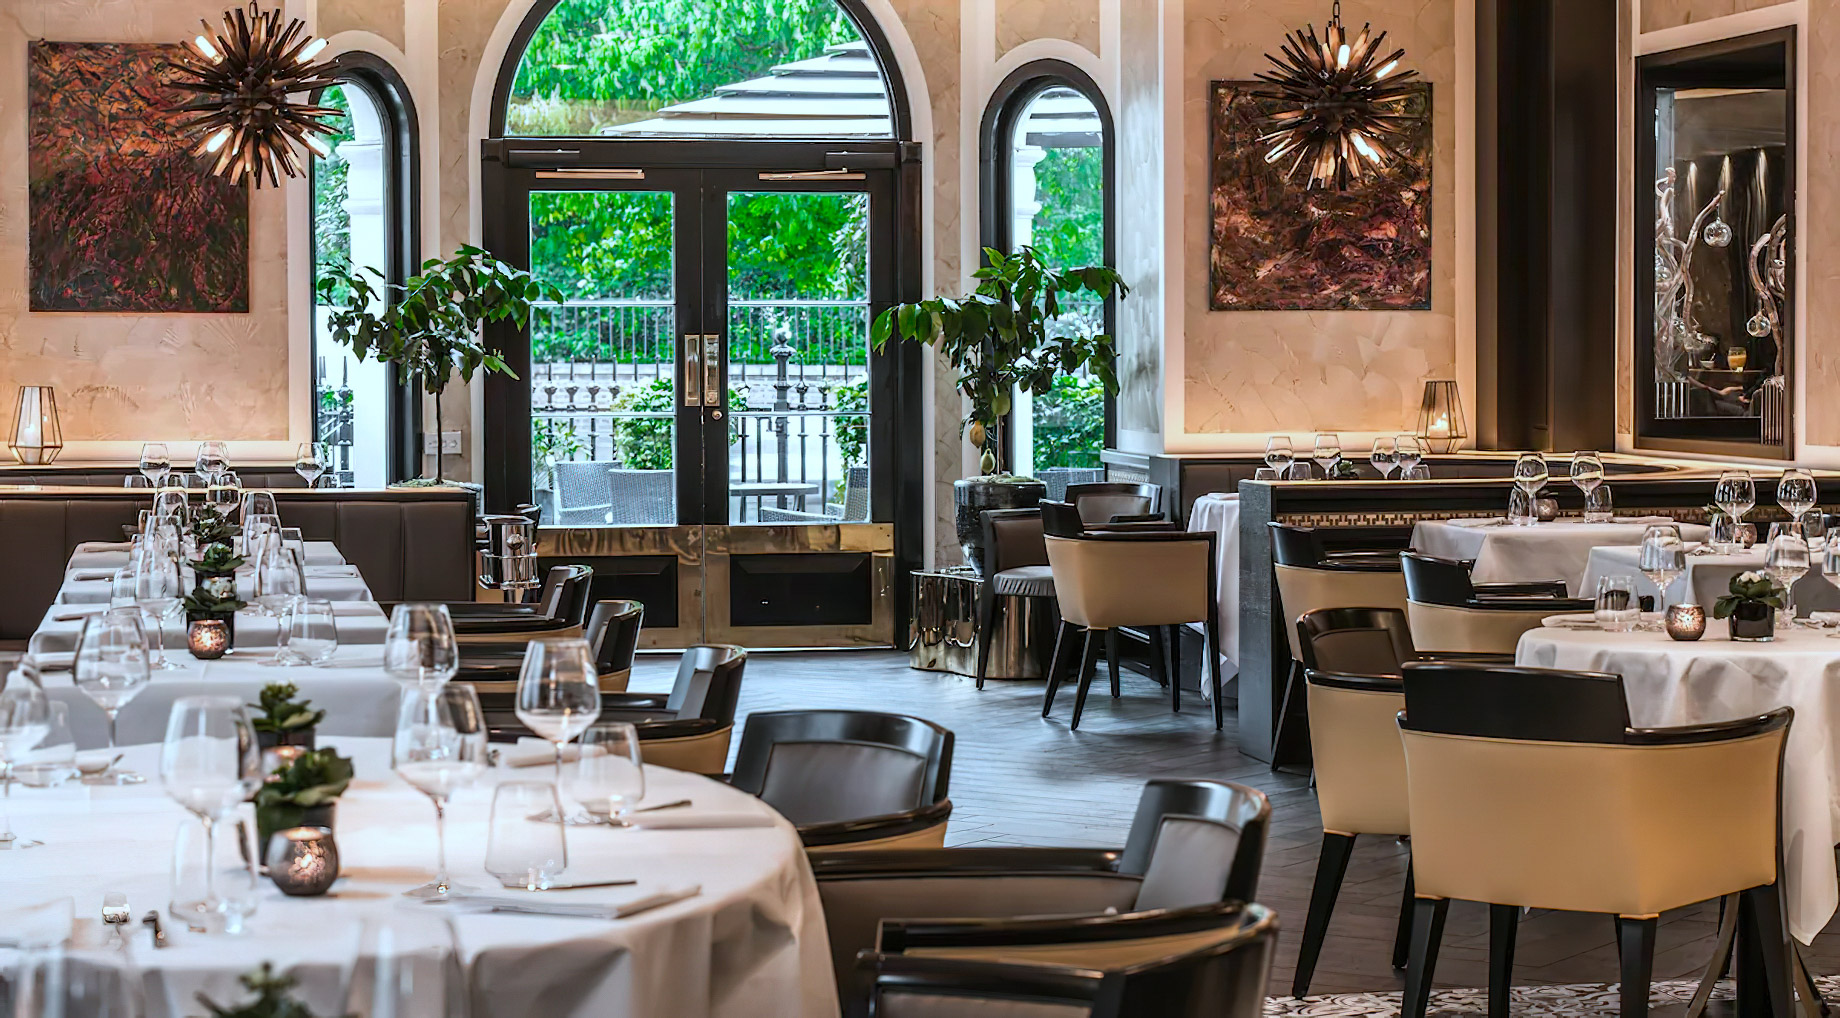 Baglioni Hotel London – South Kensington, London, United Kingdom – Brunello Bar and Restaurant